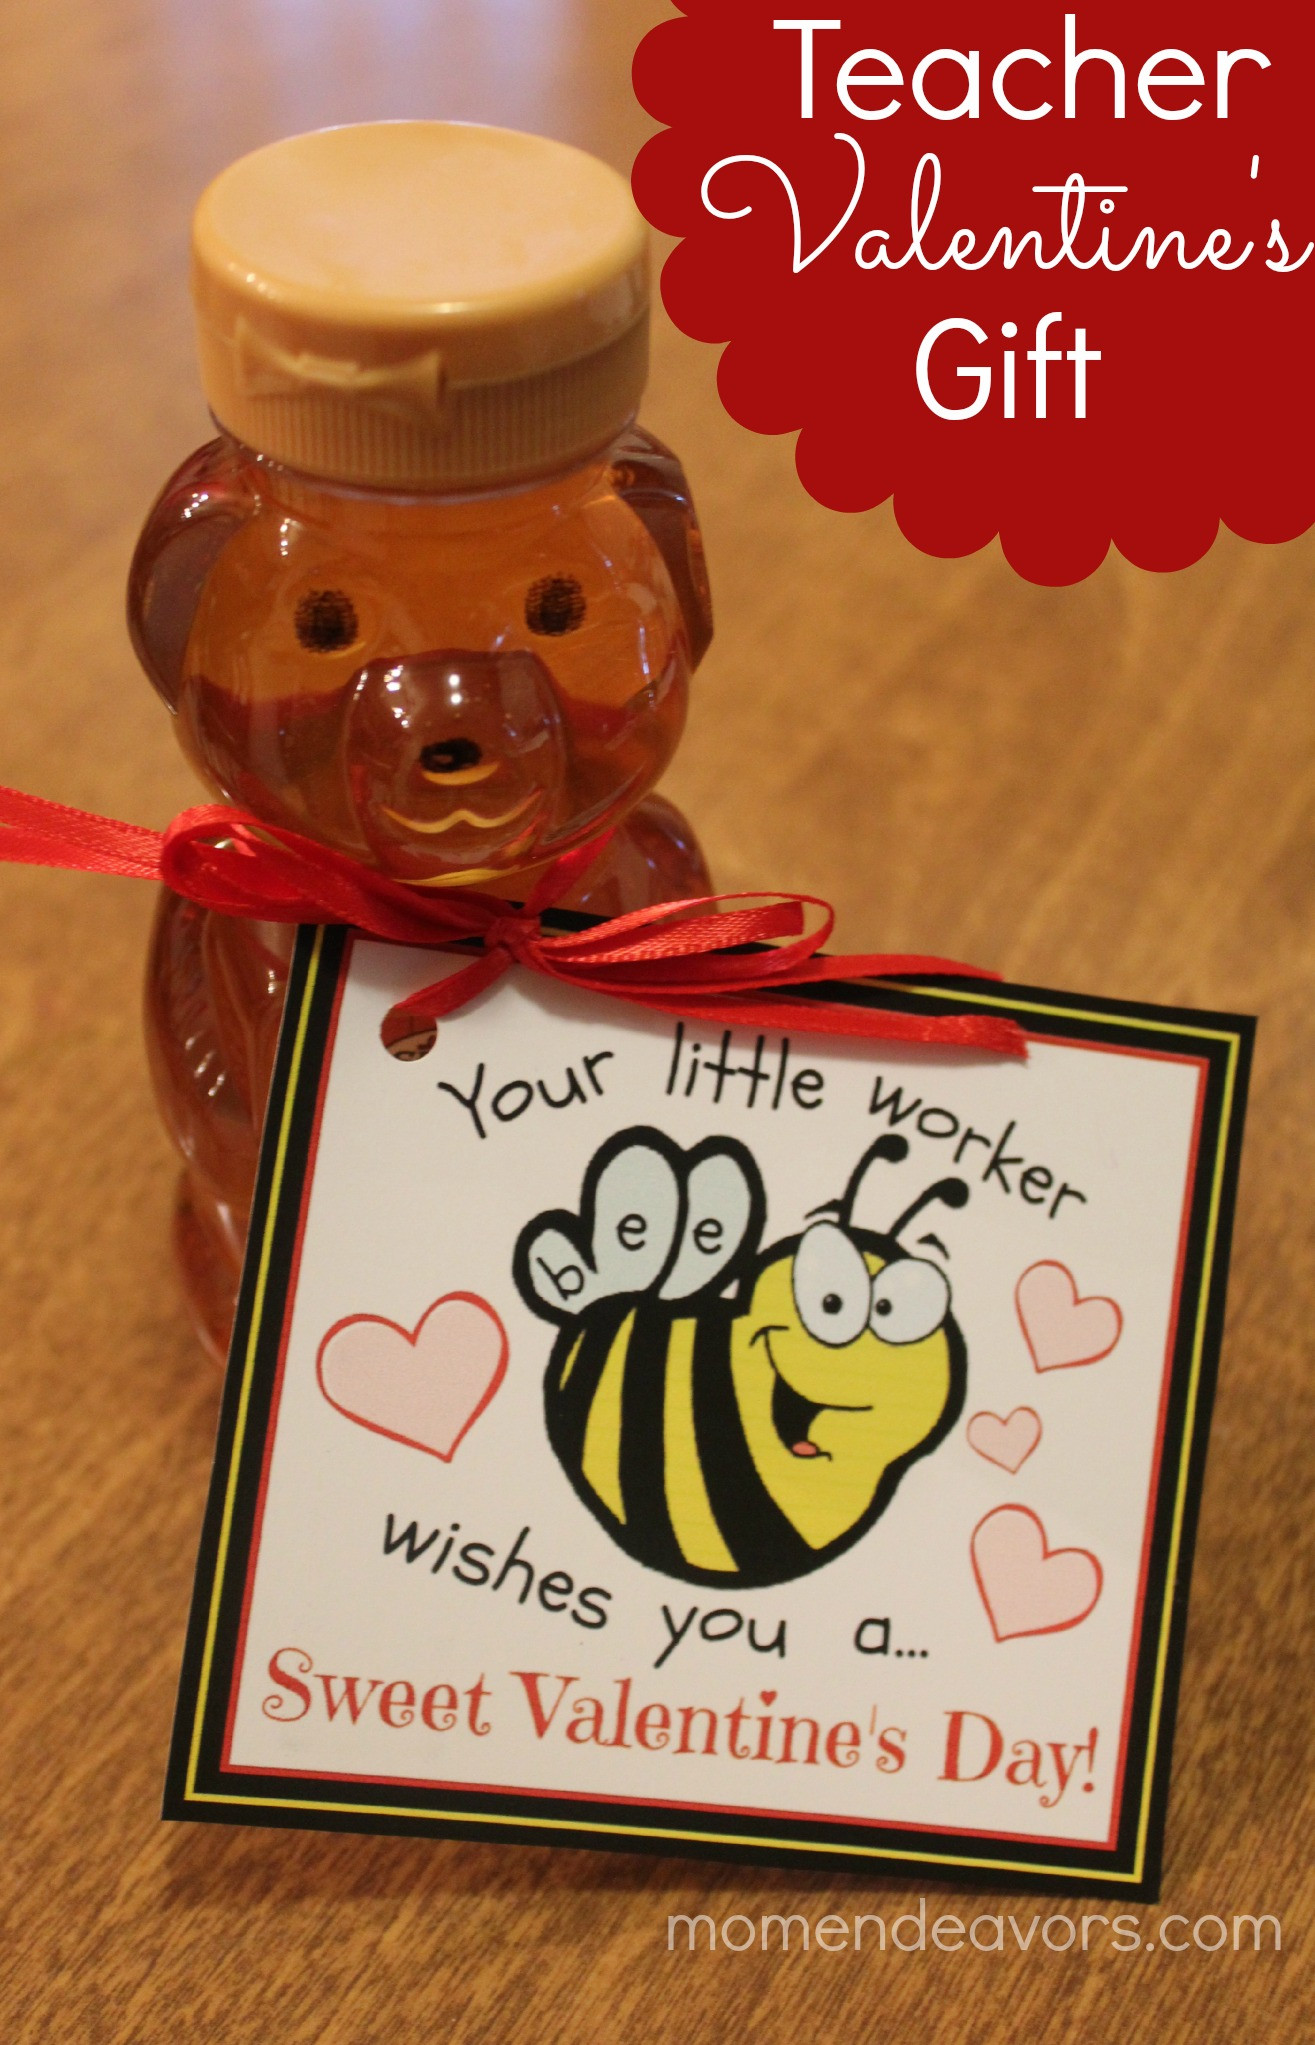 Valentines Day Ideas For Teachers
 Bee themed Teacher Valentine’s Gift